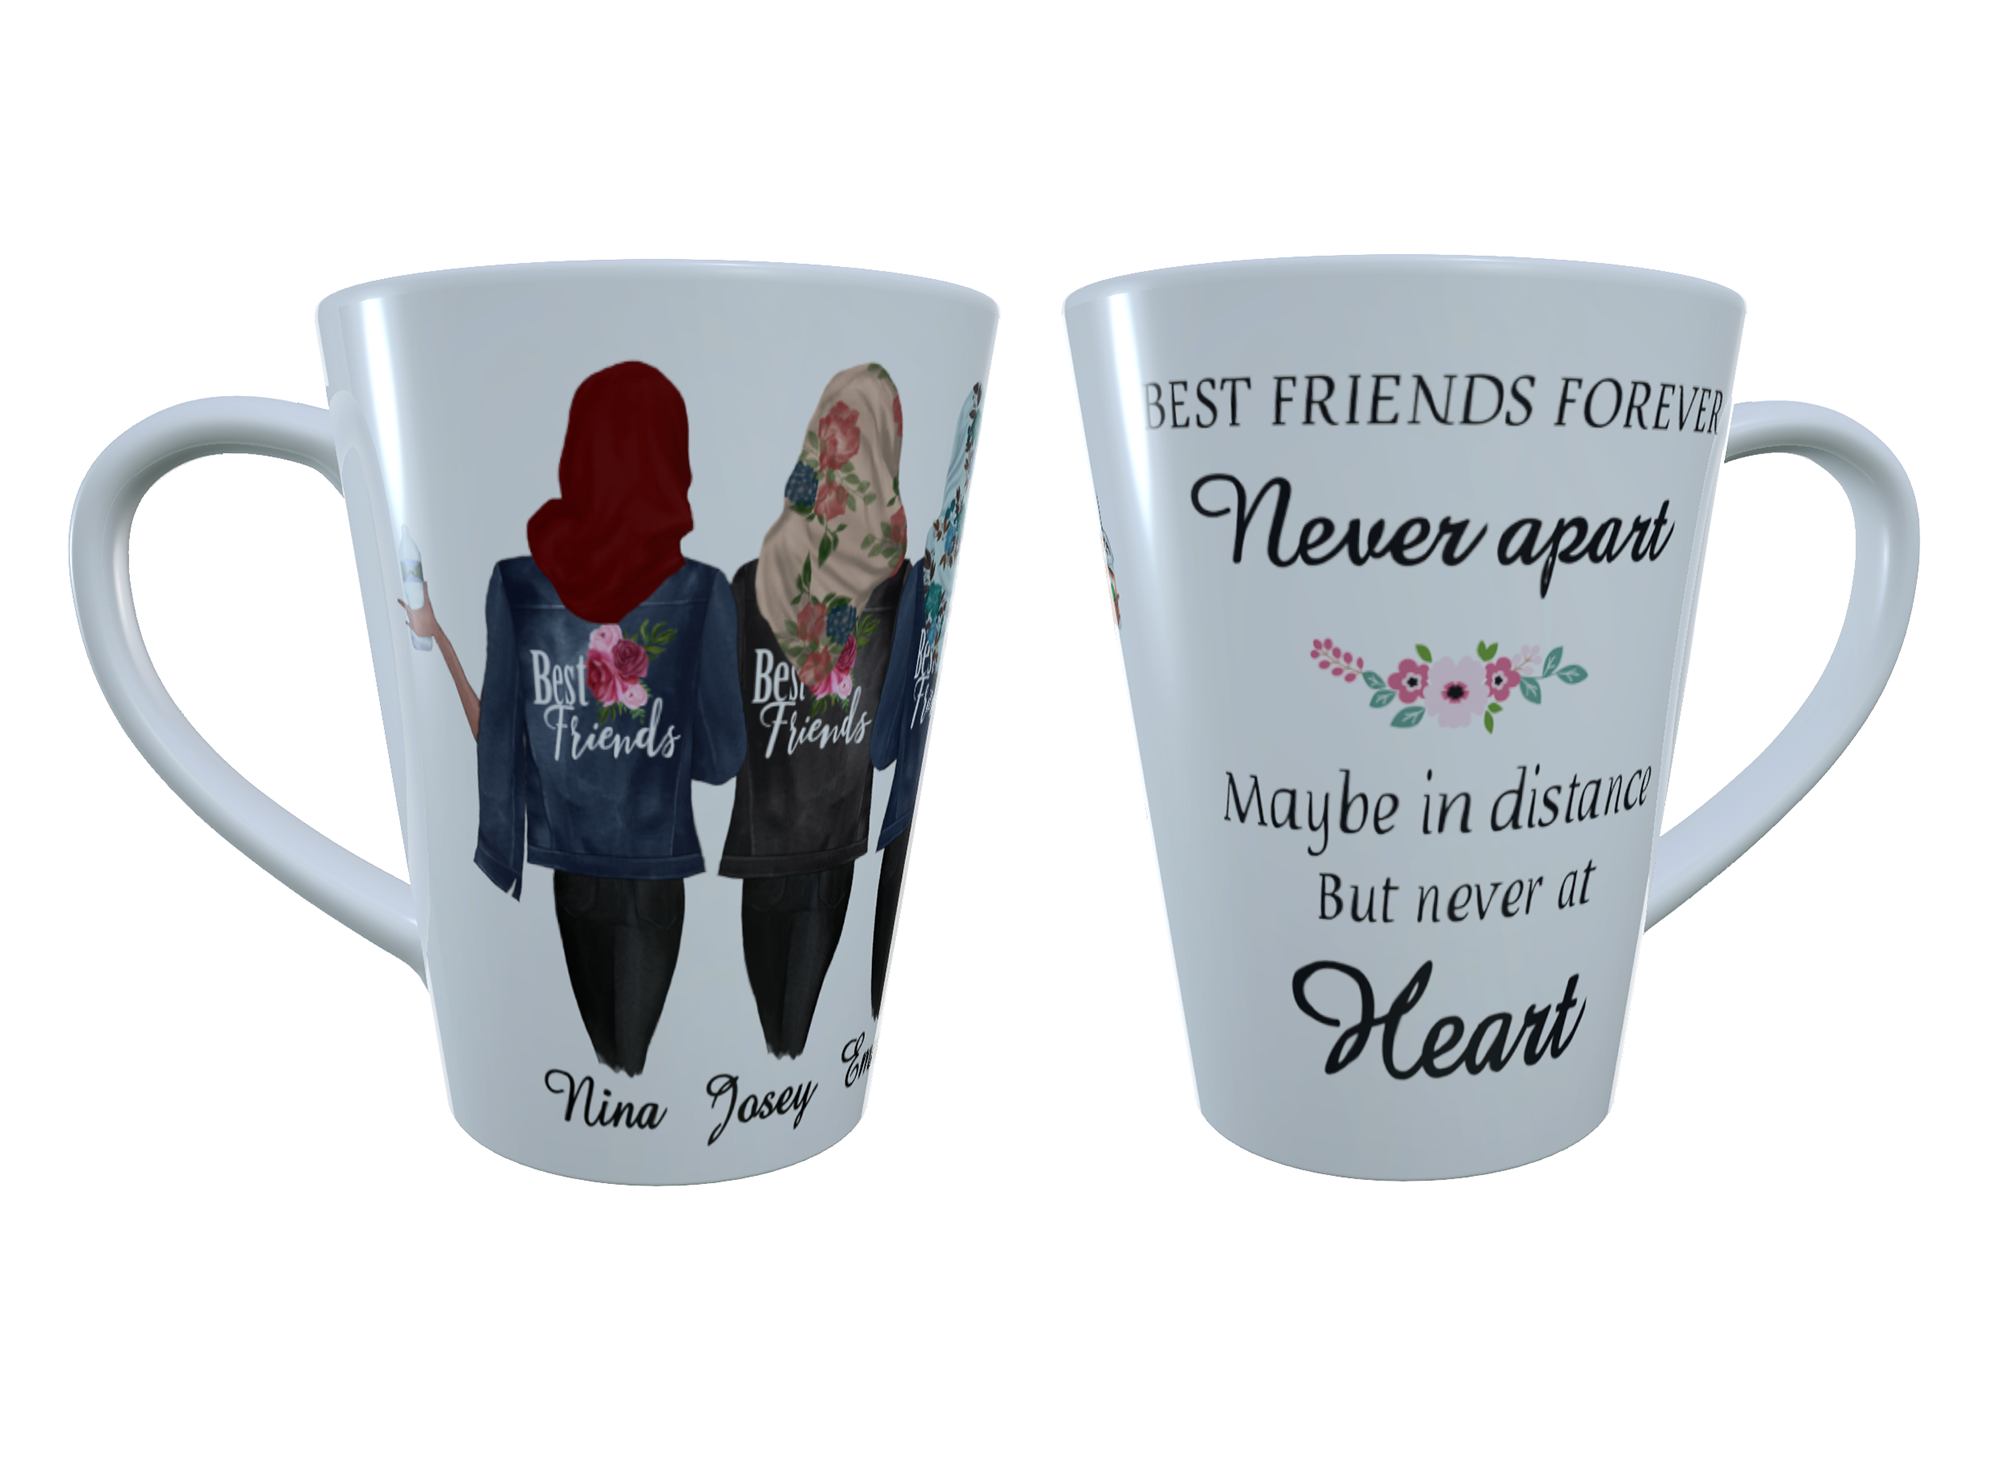 Hijabi Best Friends Forever Personalized Ceramic Latte Mug - Click Image to Close